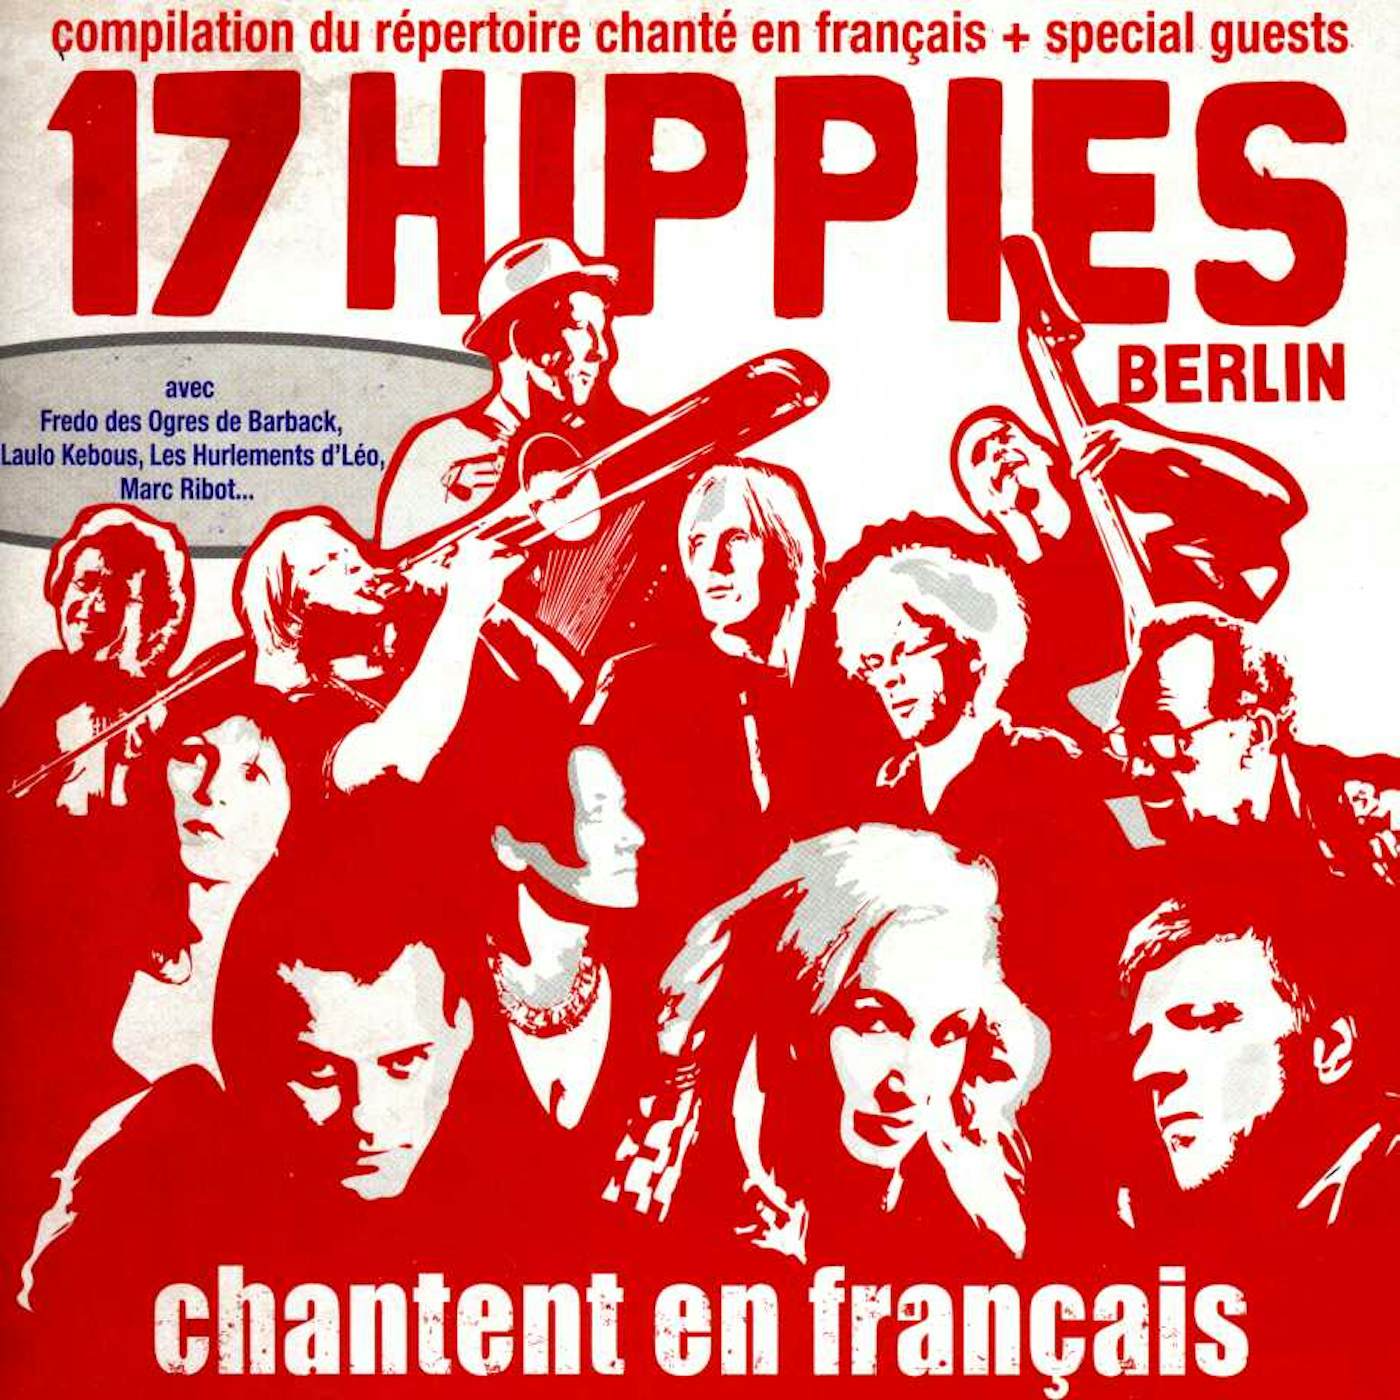 17 Hippies CHANTENT EN FRANCAIS CD